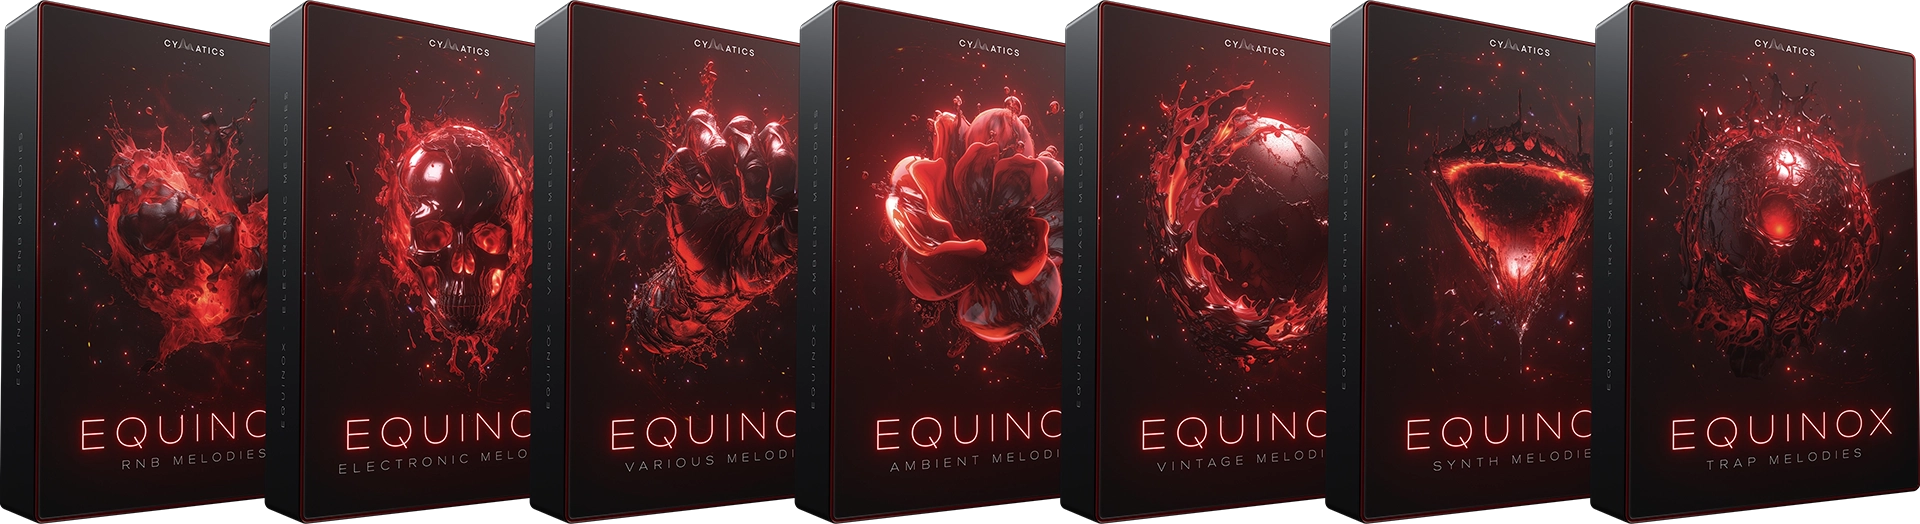 Equinox Launch Edition